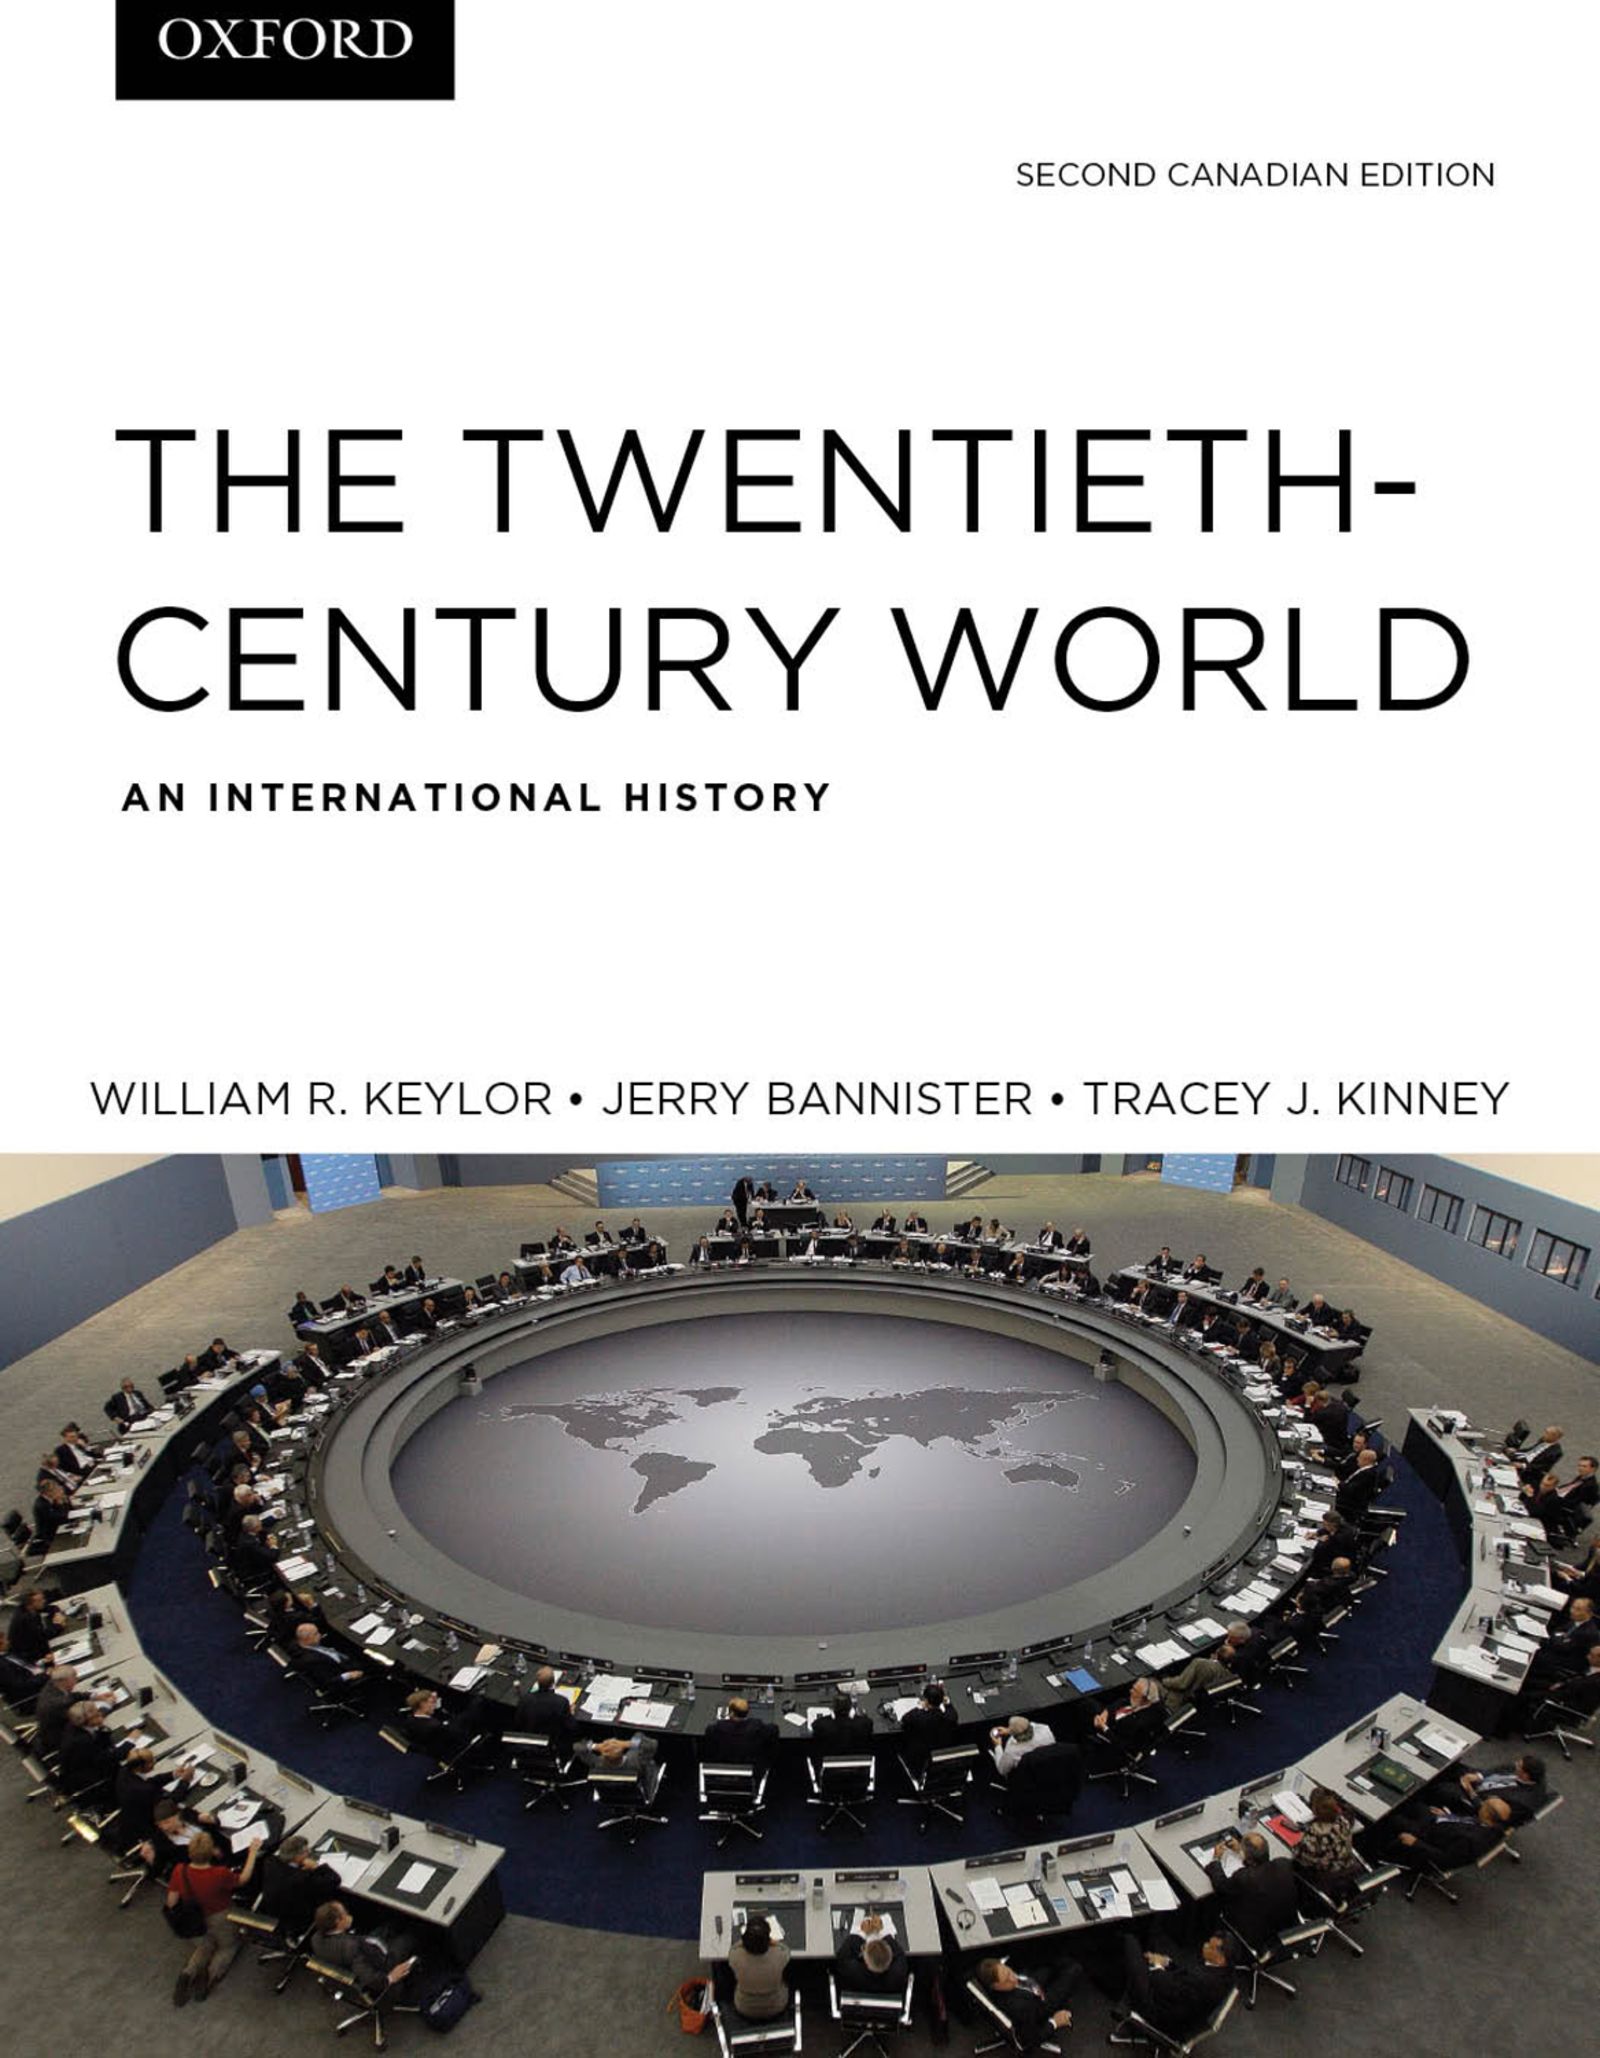 The Twentieth-Century World